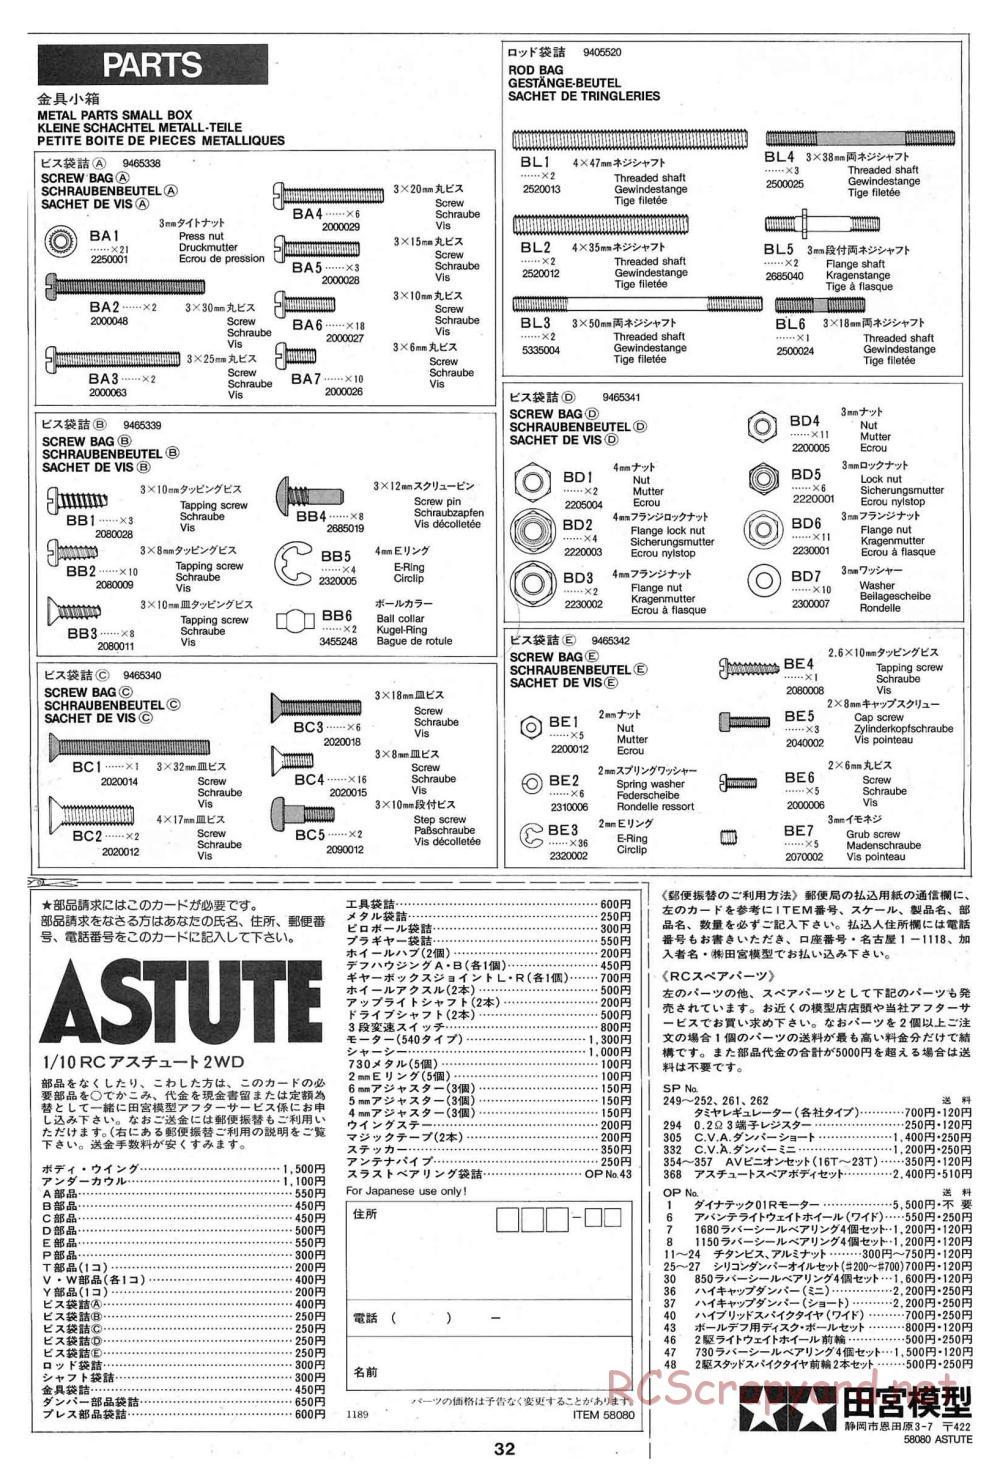 Tamiya - Astute - 58080 - Manual - Page 32